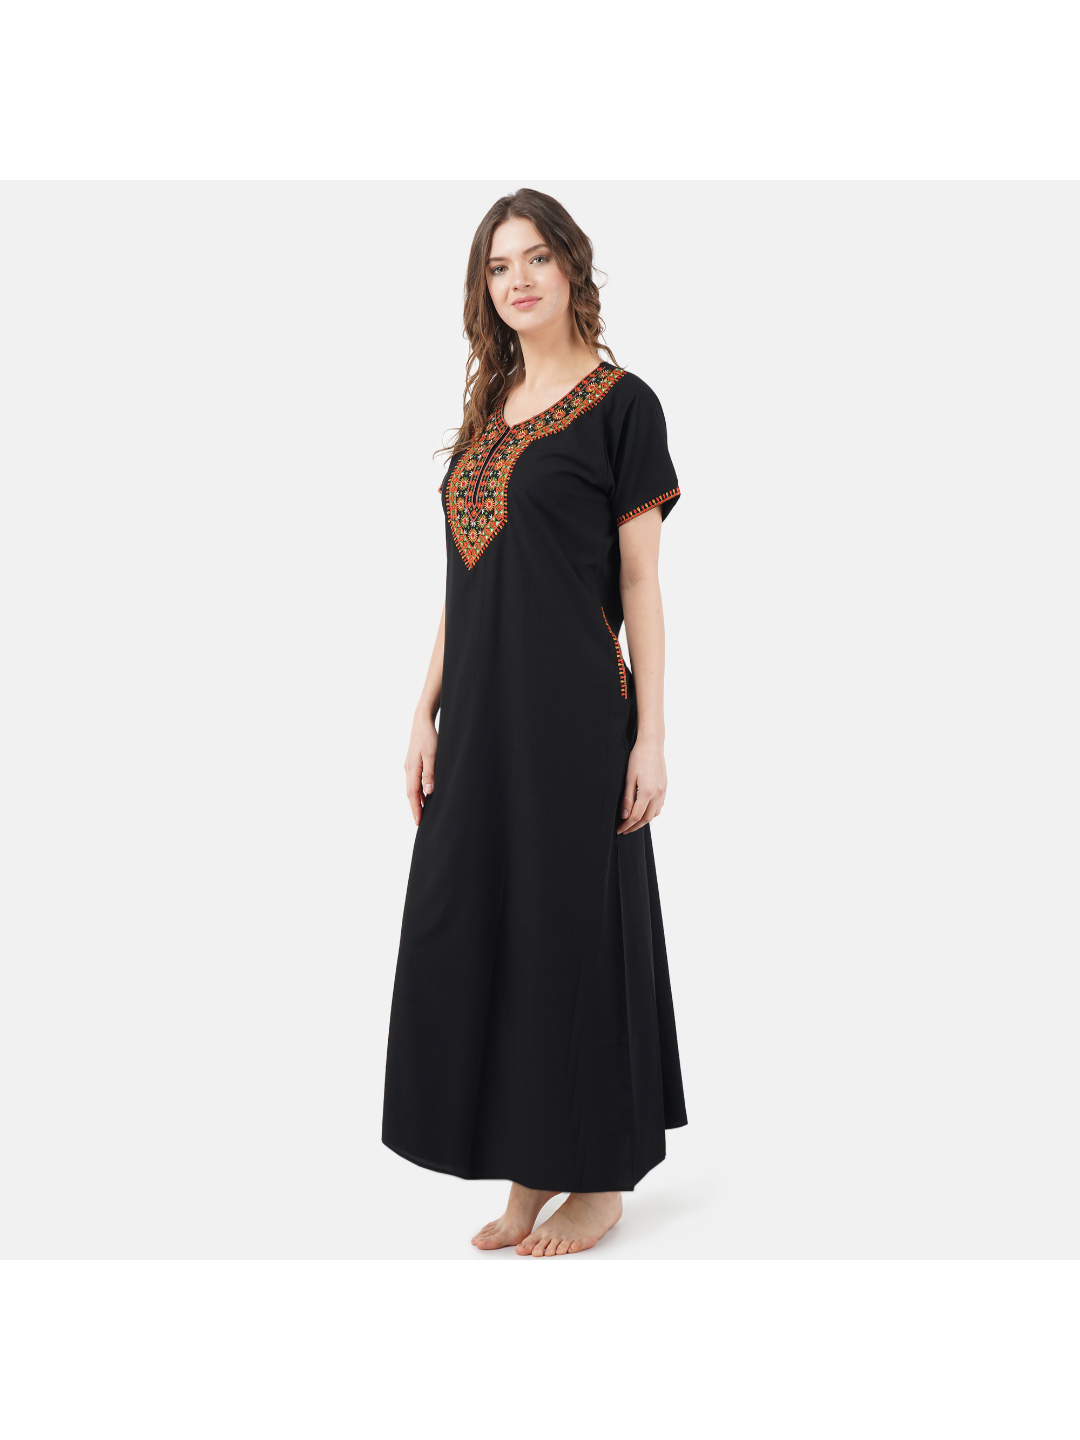 Royalcore Vintage Style Cotton Night Gown Cotton Dress – Retro Fairy